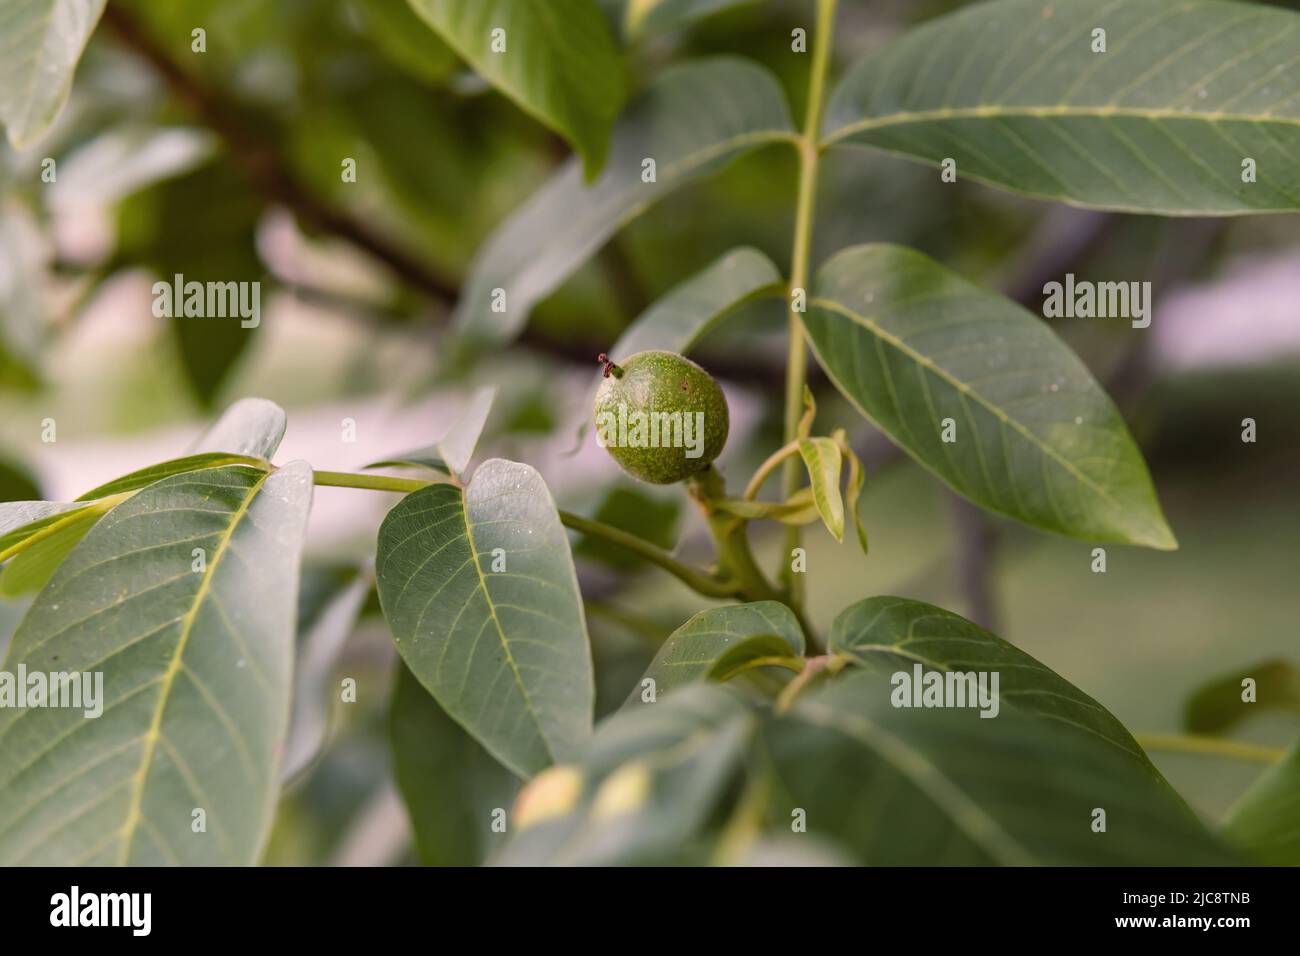 Small unripe walnut hang on a branch. Raw walnut in a green nutshell.  Stock Photo